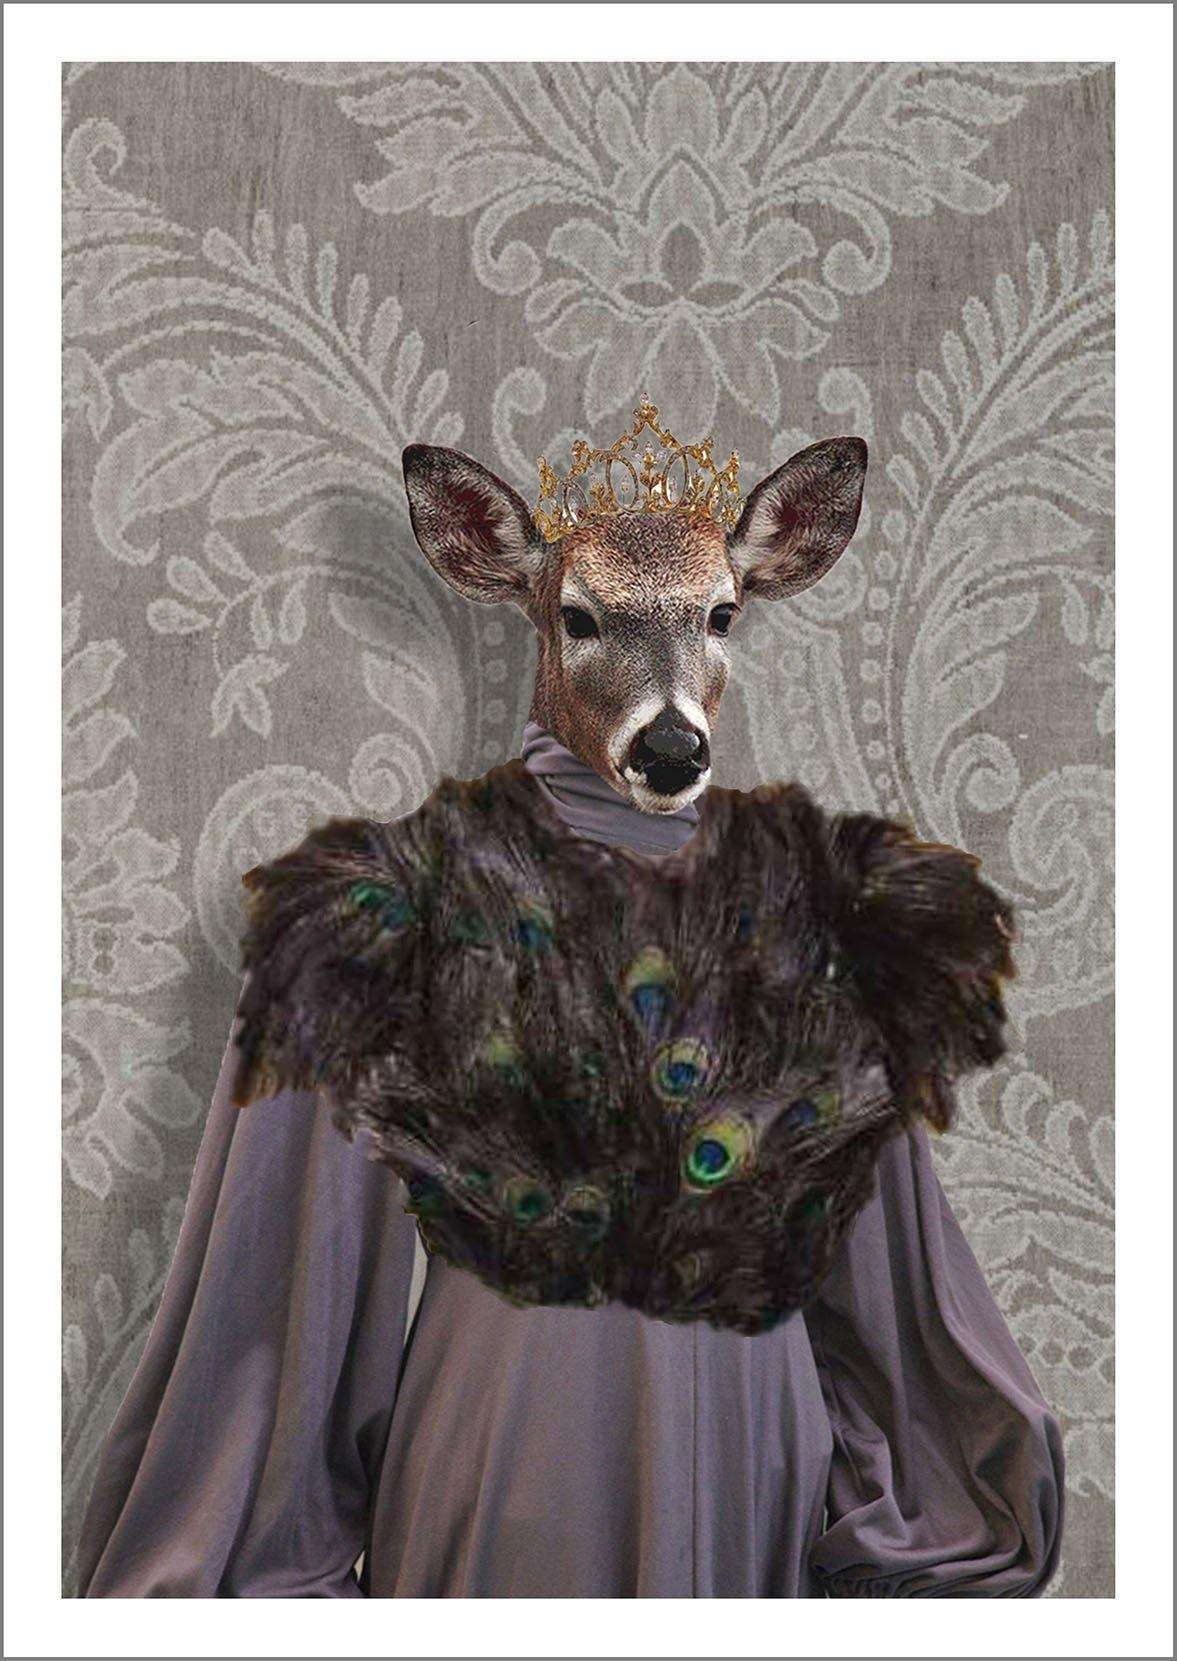 MRS DEER: Fun Doe Woman Animal Art Print - Pimlico Prints